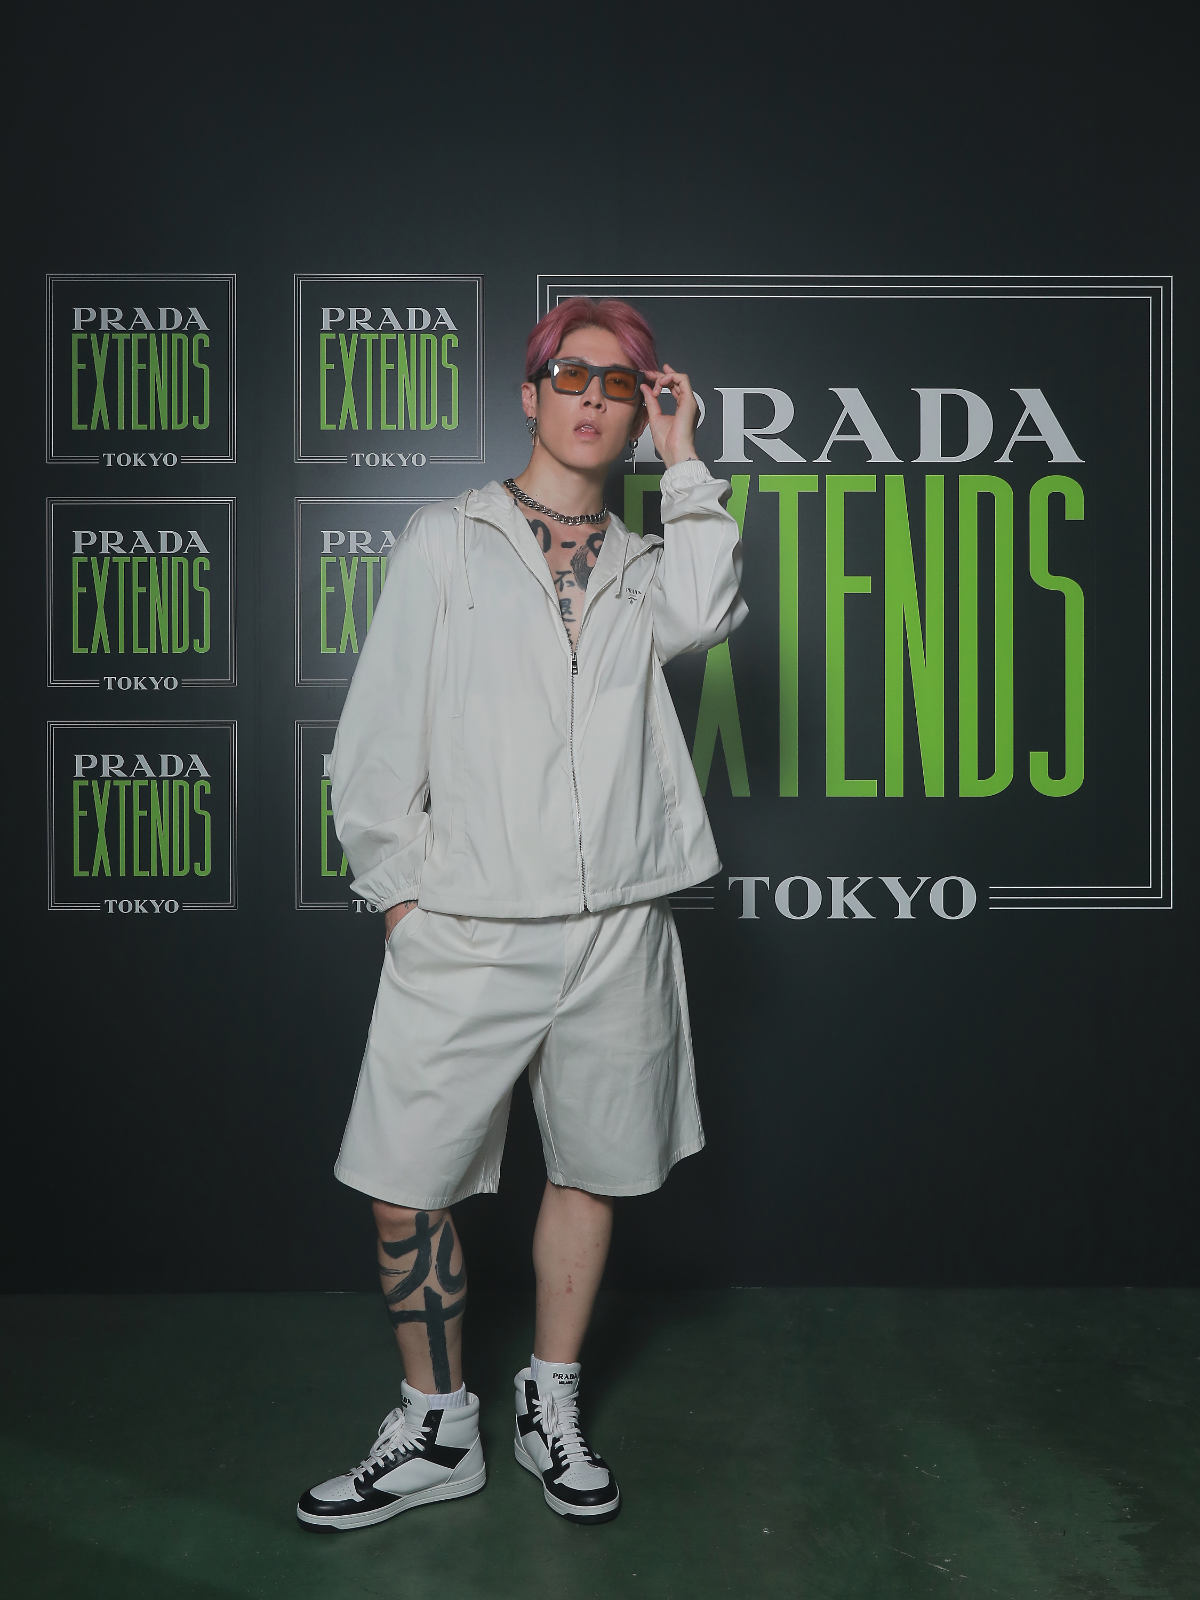 Prada Brings Prada Extends To Tokyo